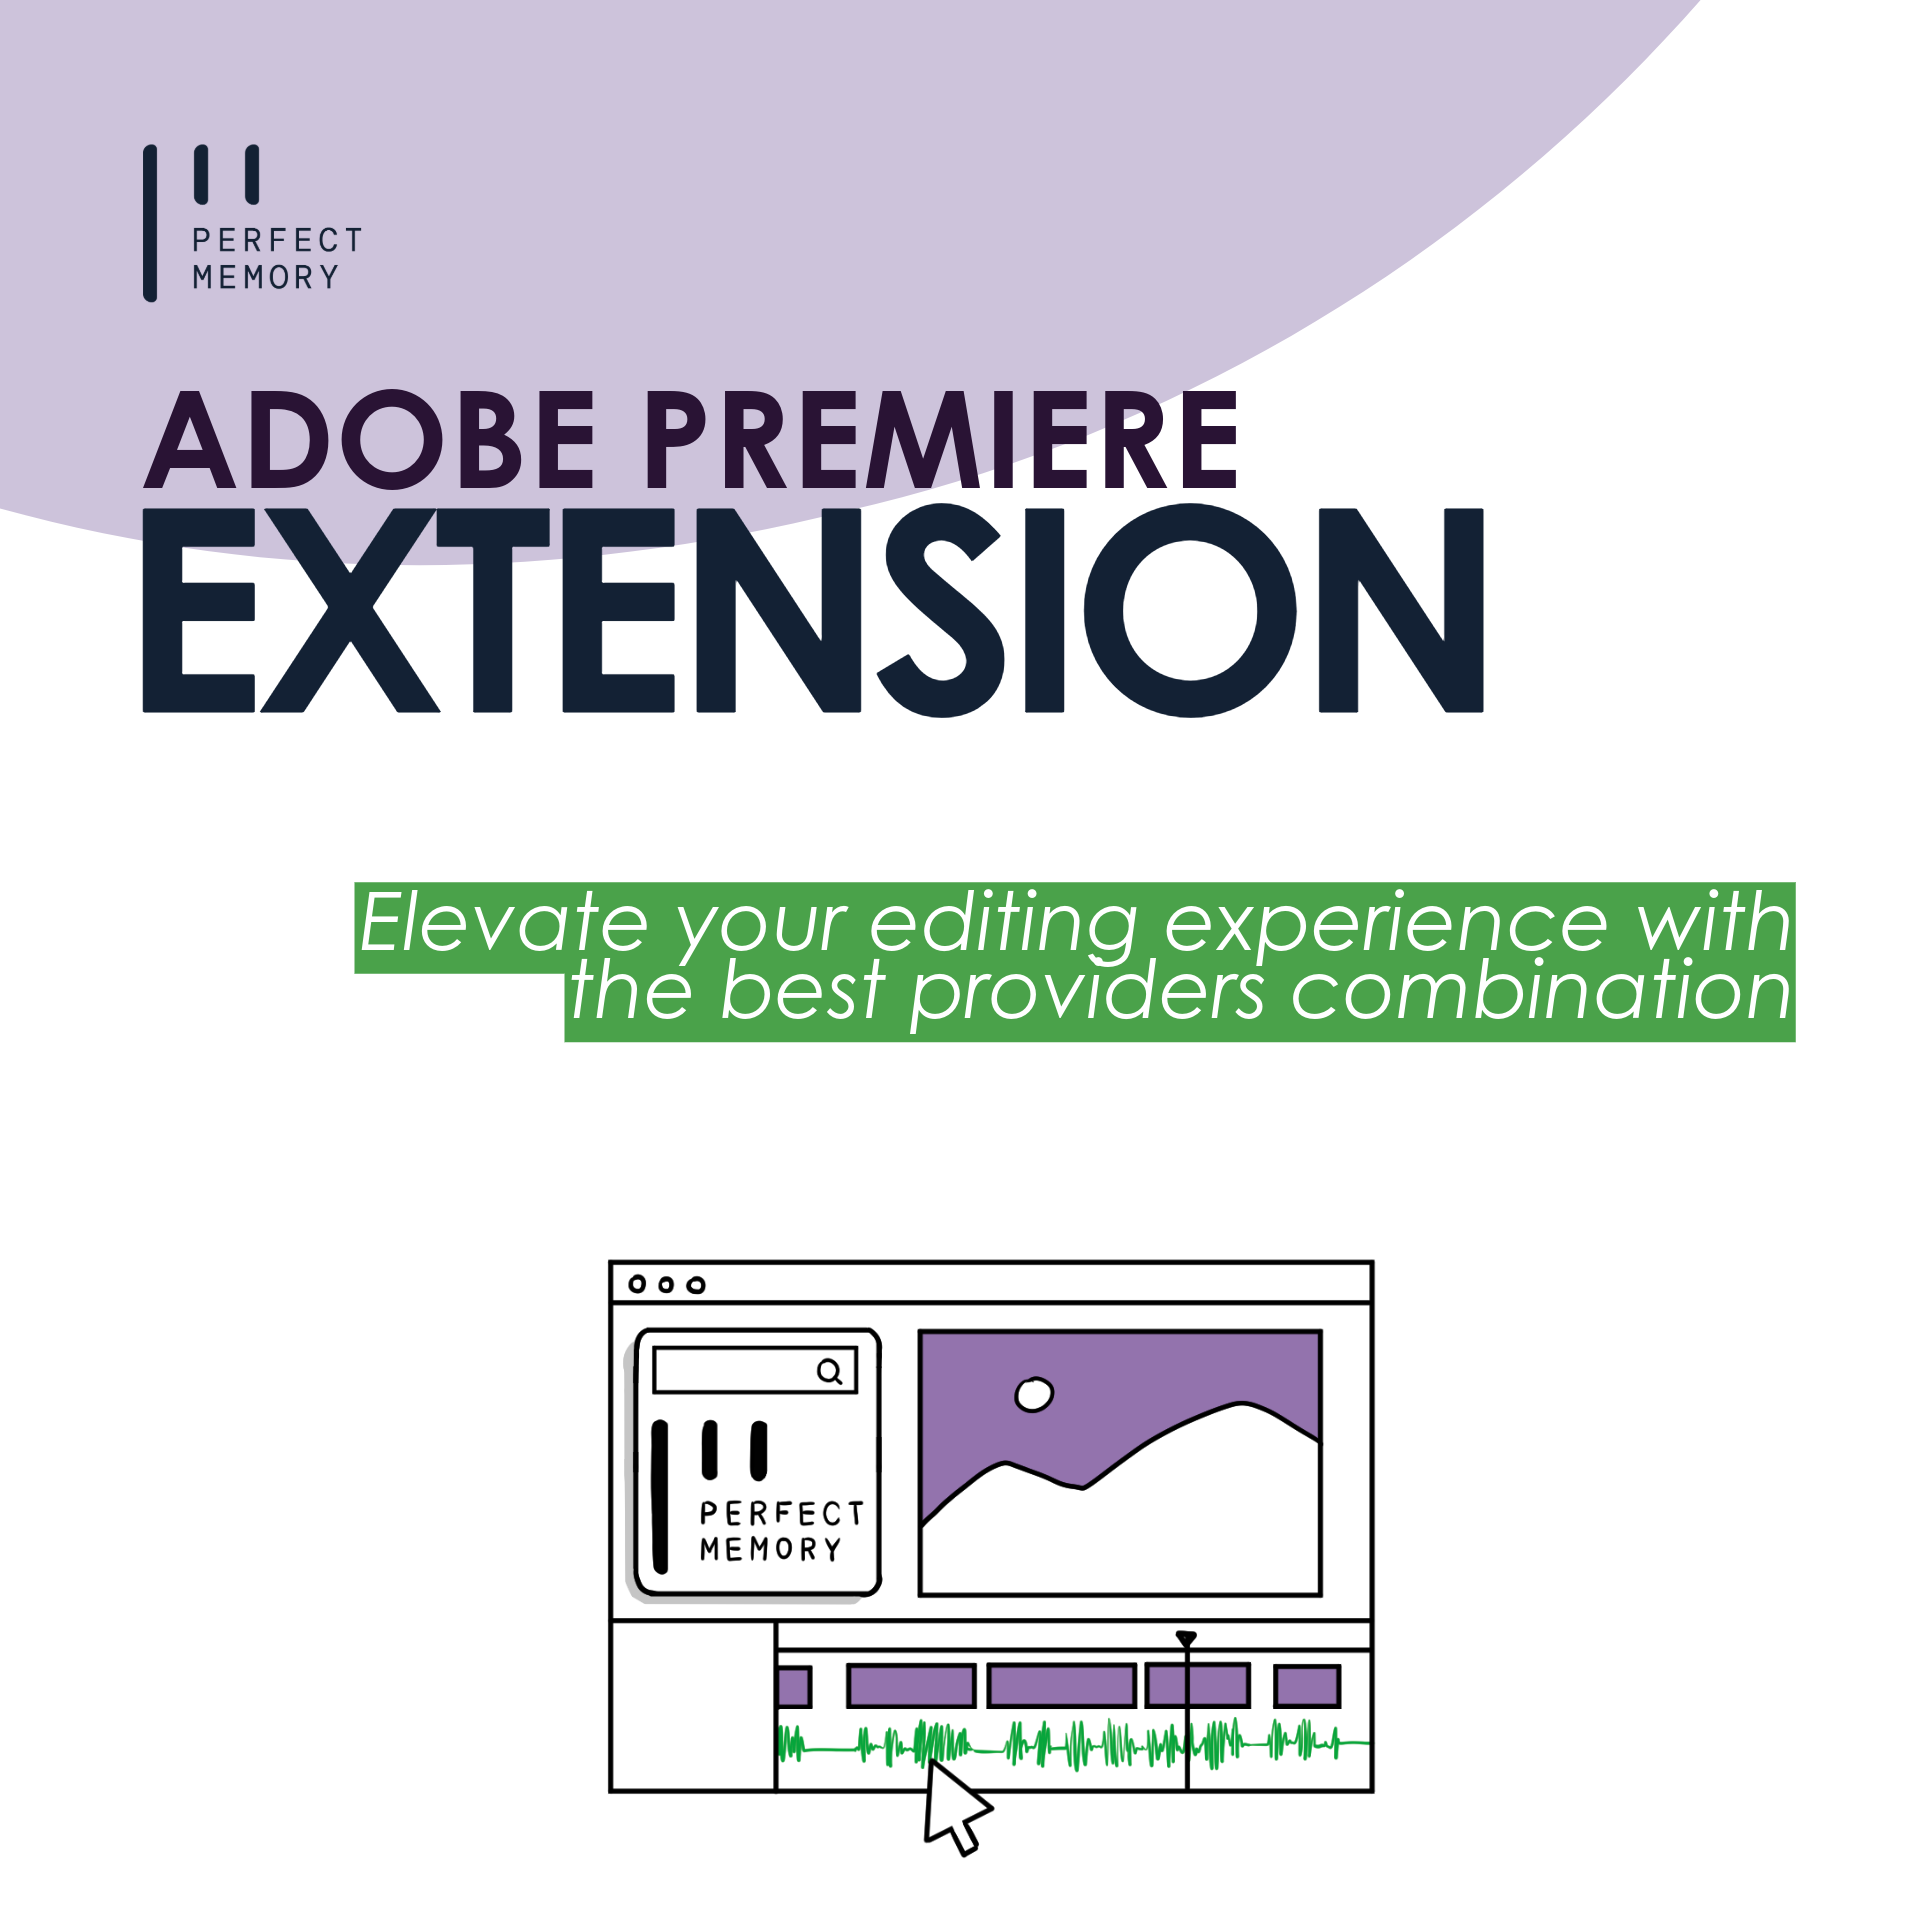 Adobe Premiere extension